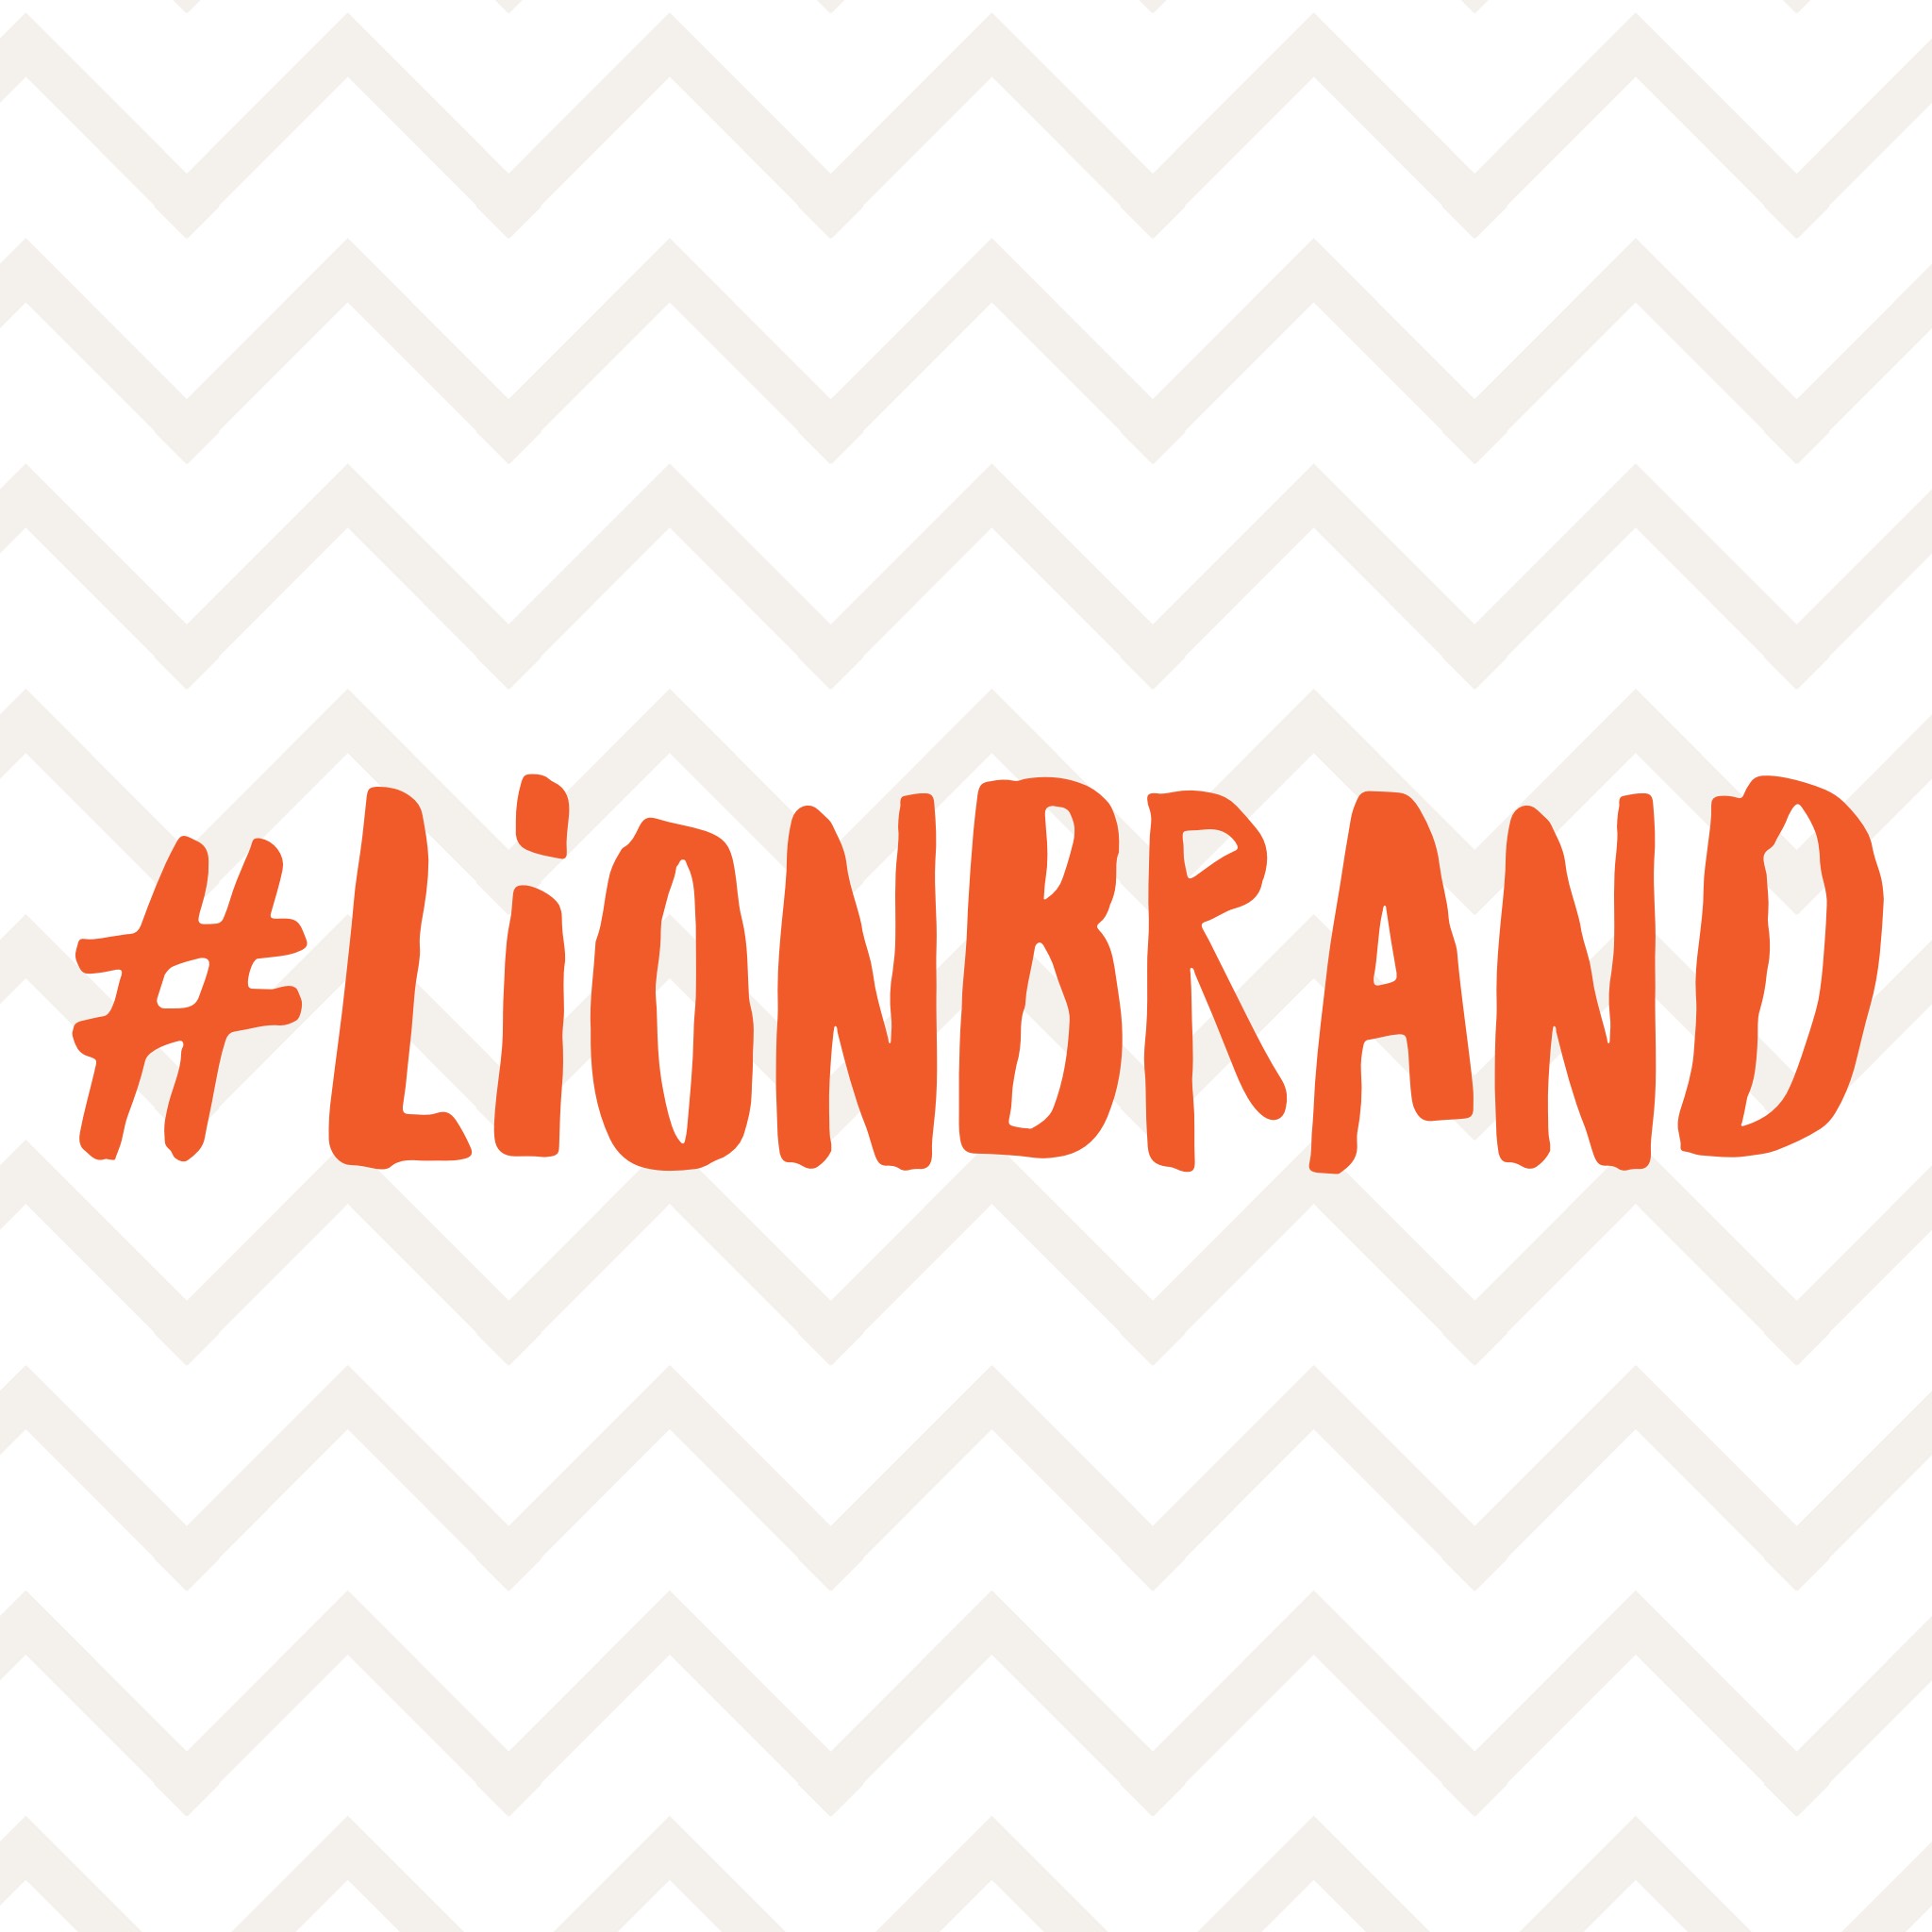 Show us your #LionBrand!